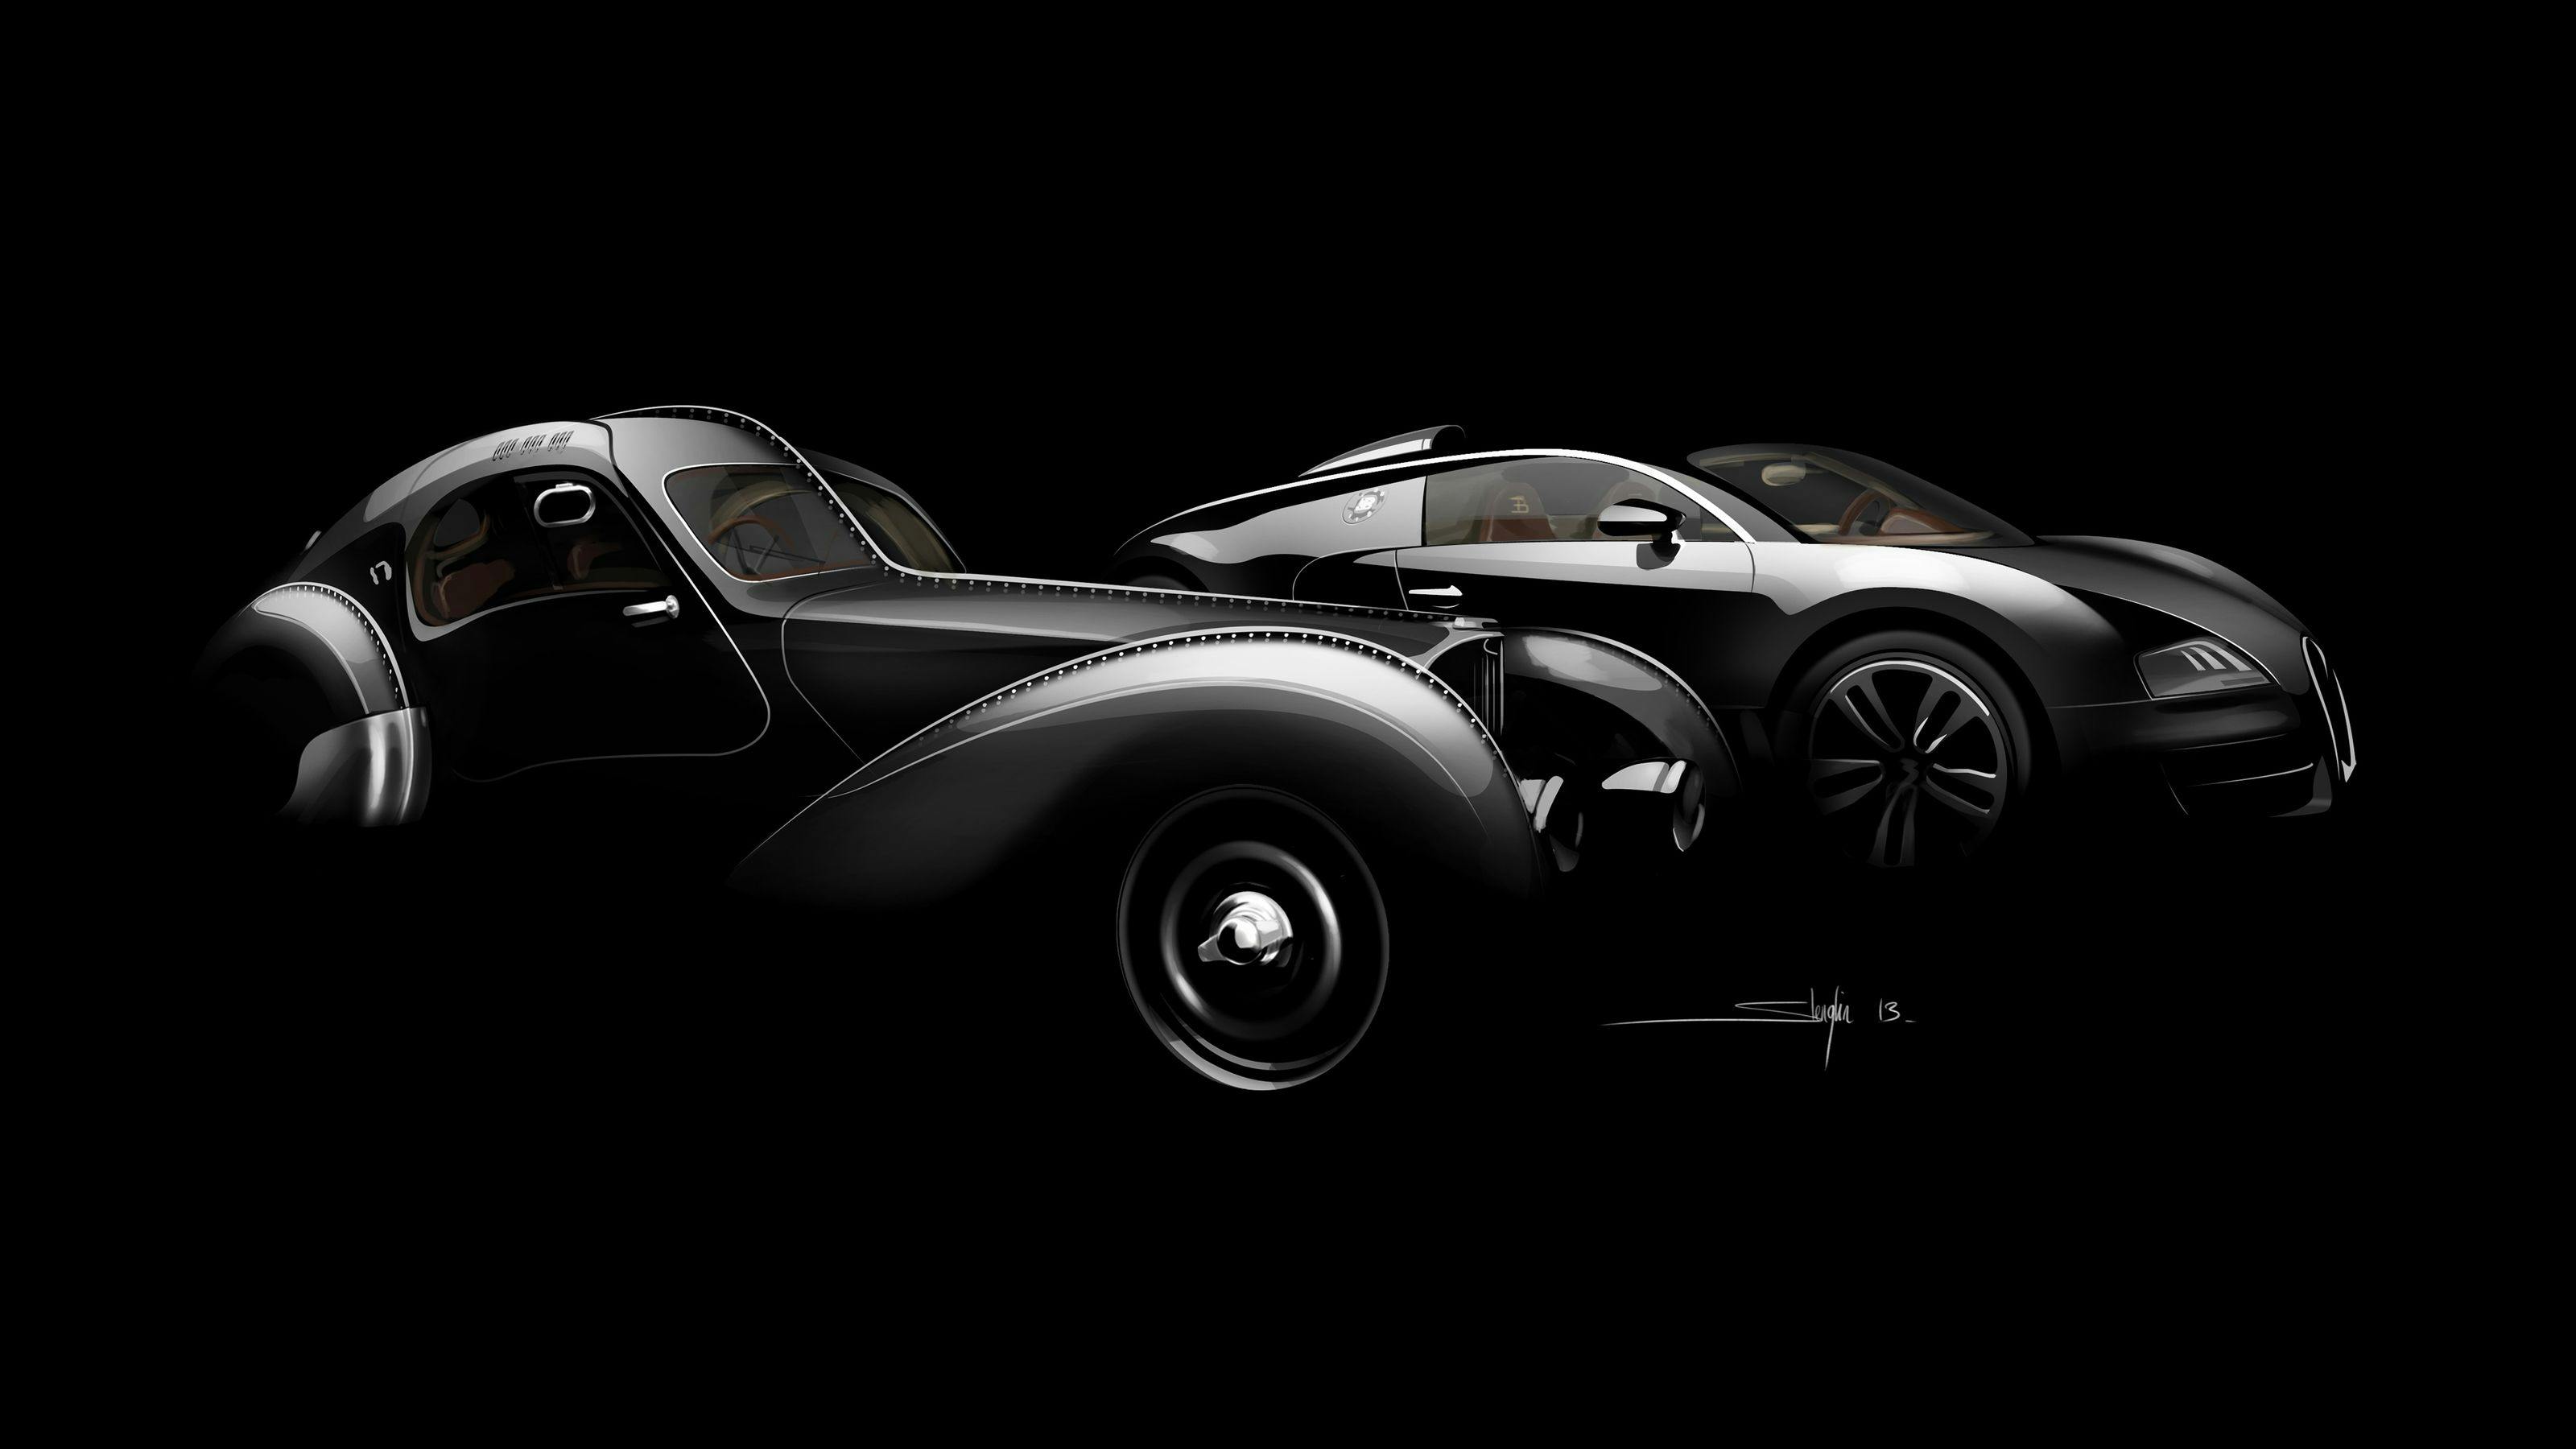 IAA 2013 : première mondiale de la voiture baptisée Légende de Bugatti « Jean Bugatti »